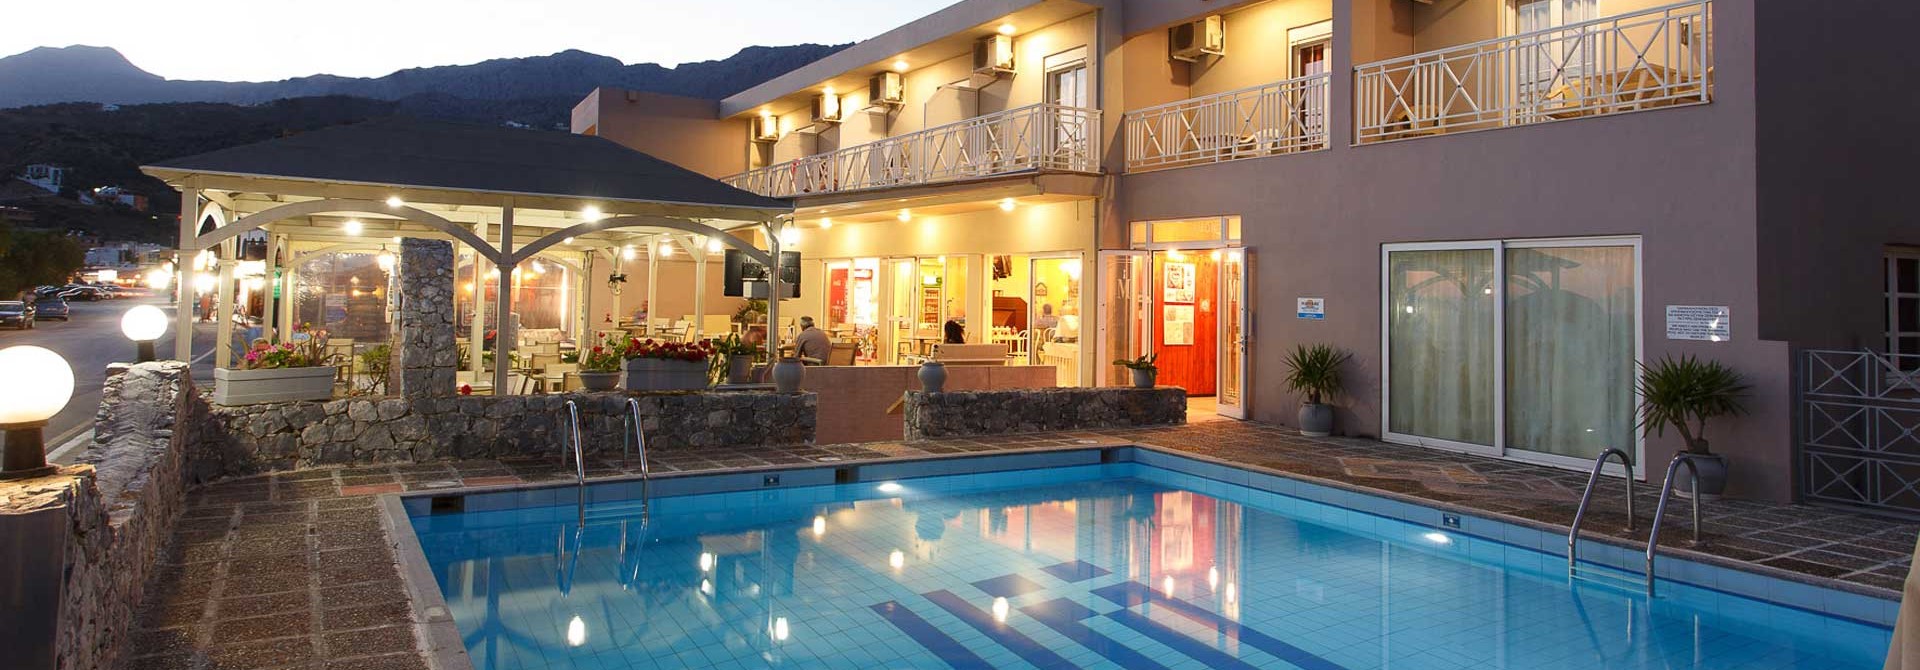 lamon hotel crete